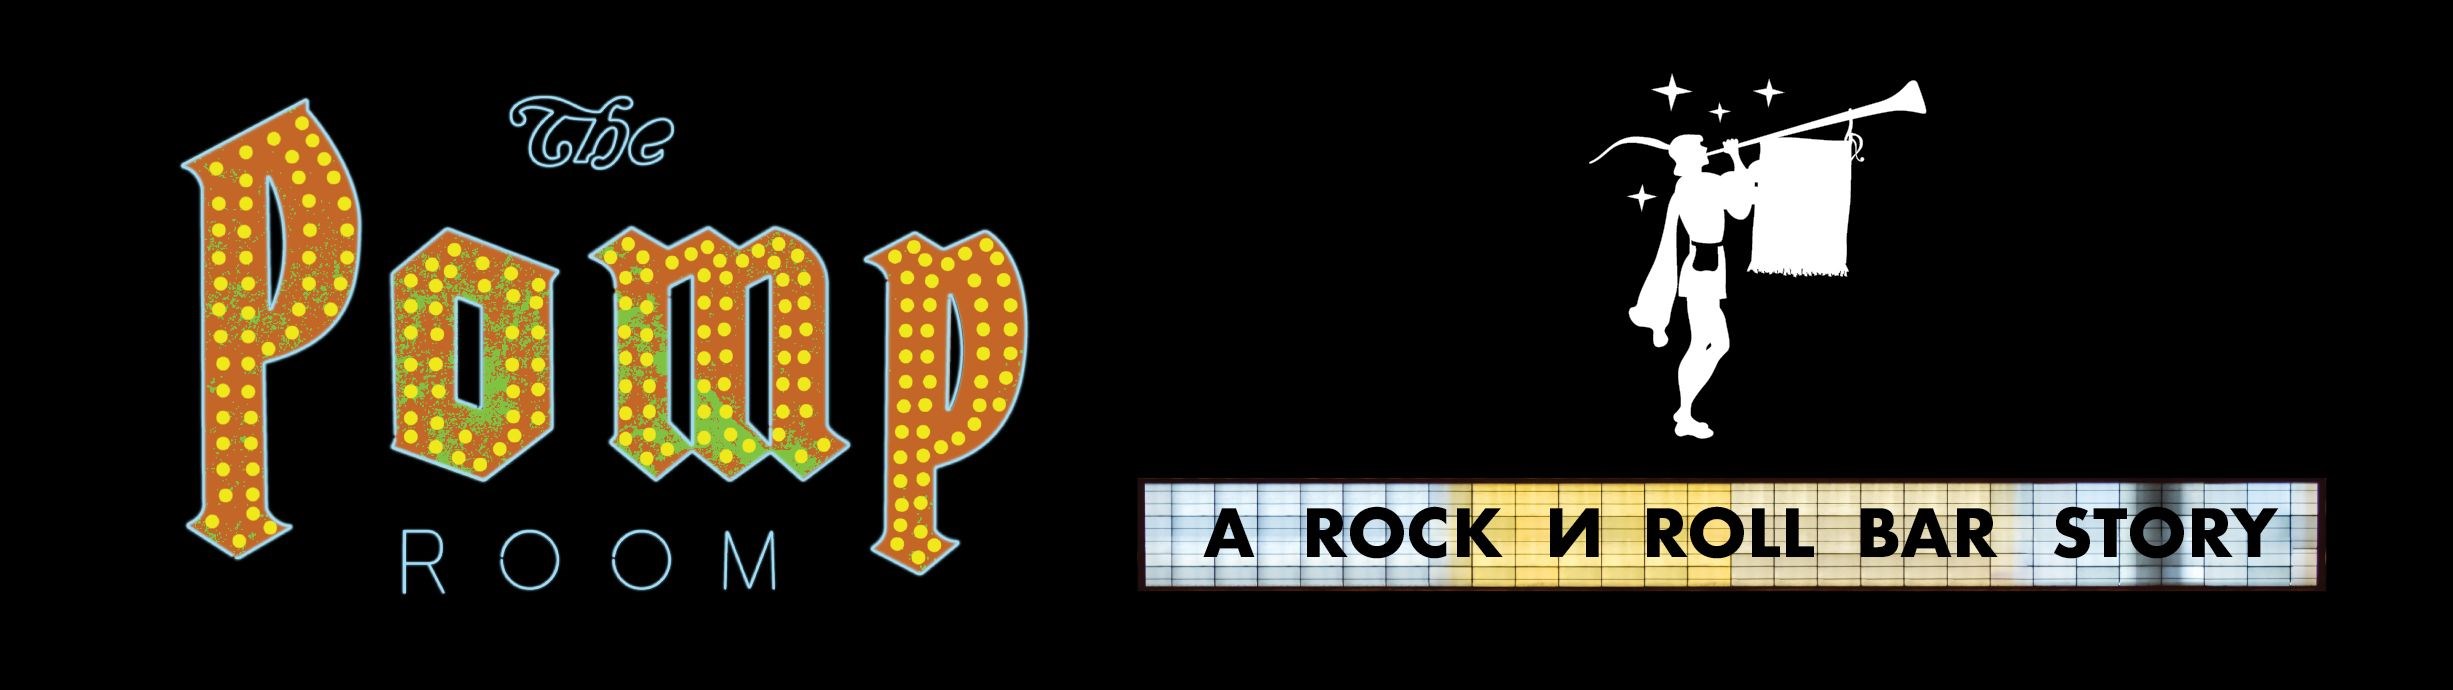 THE POMP ROOM - A Rock N Roll Bar Story